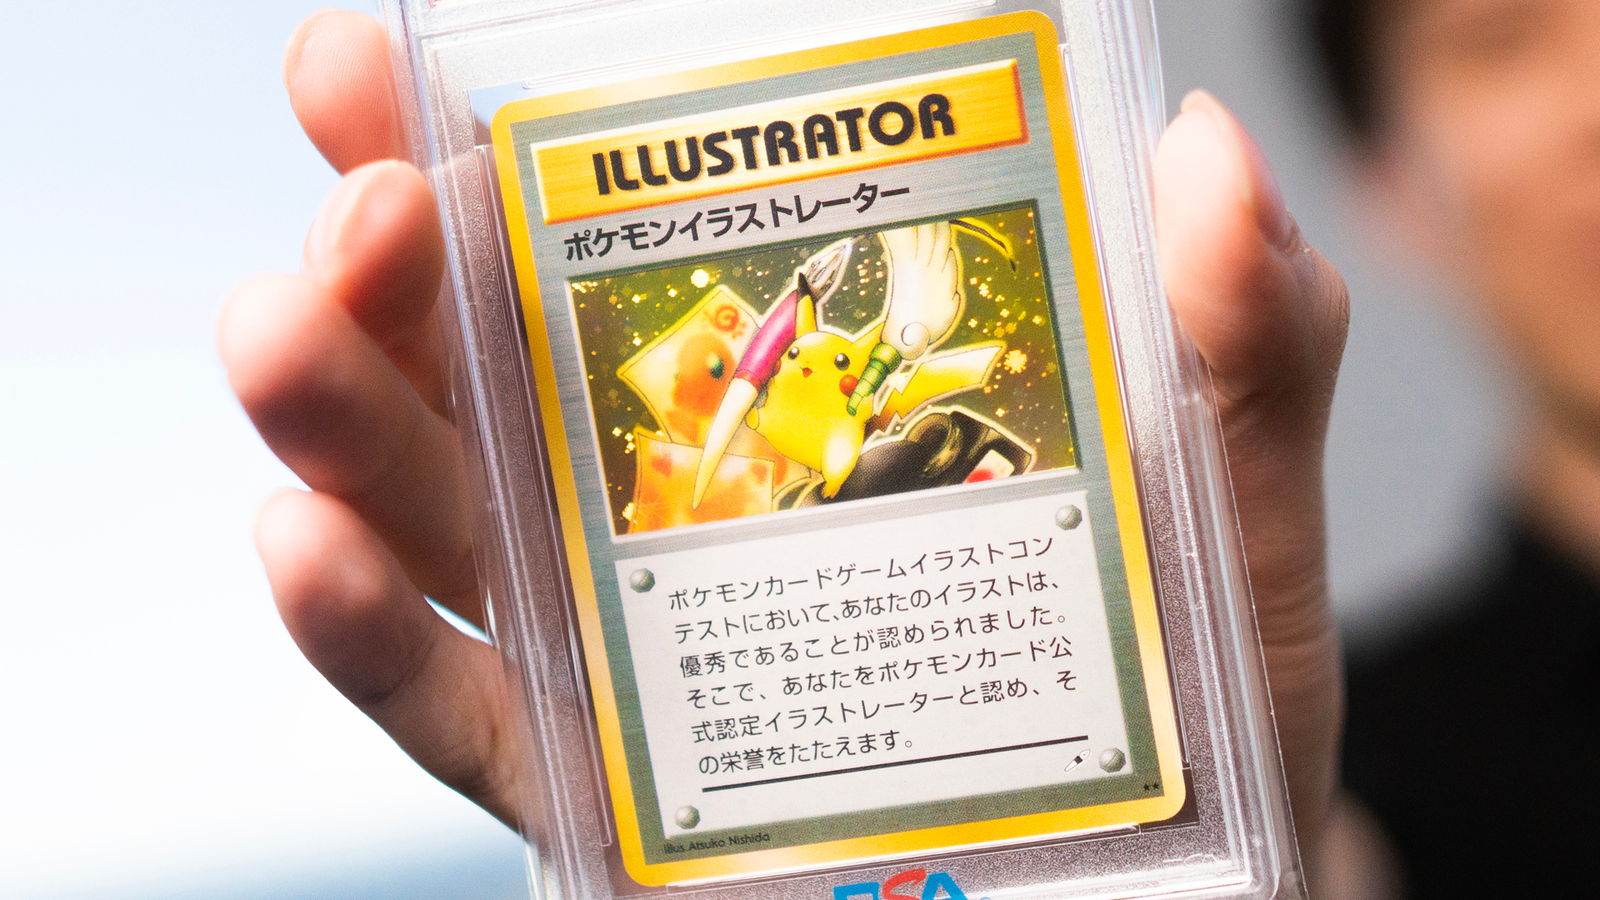 The world's most valuable Pokémon card, Pikachu Illustrator, sells